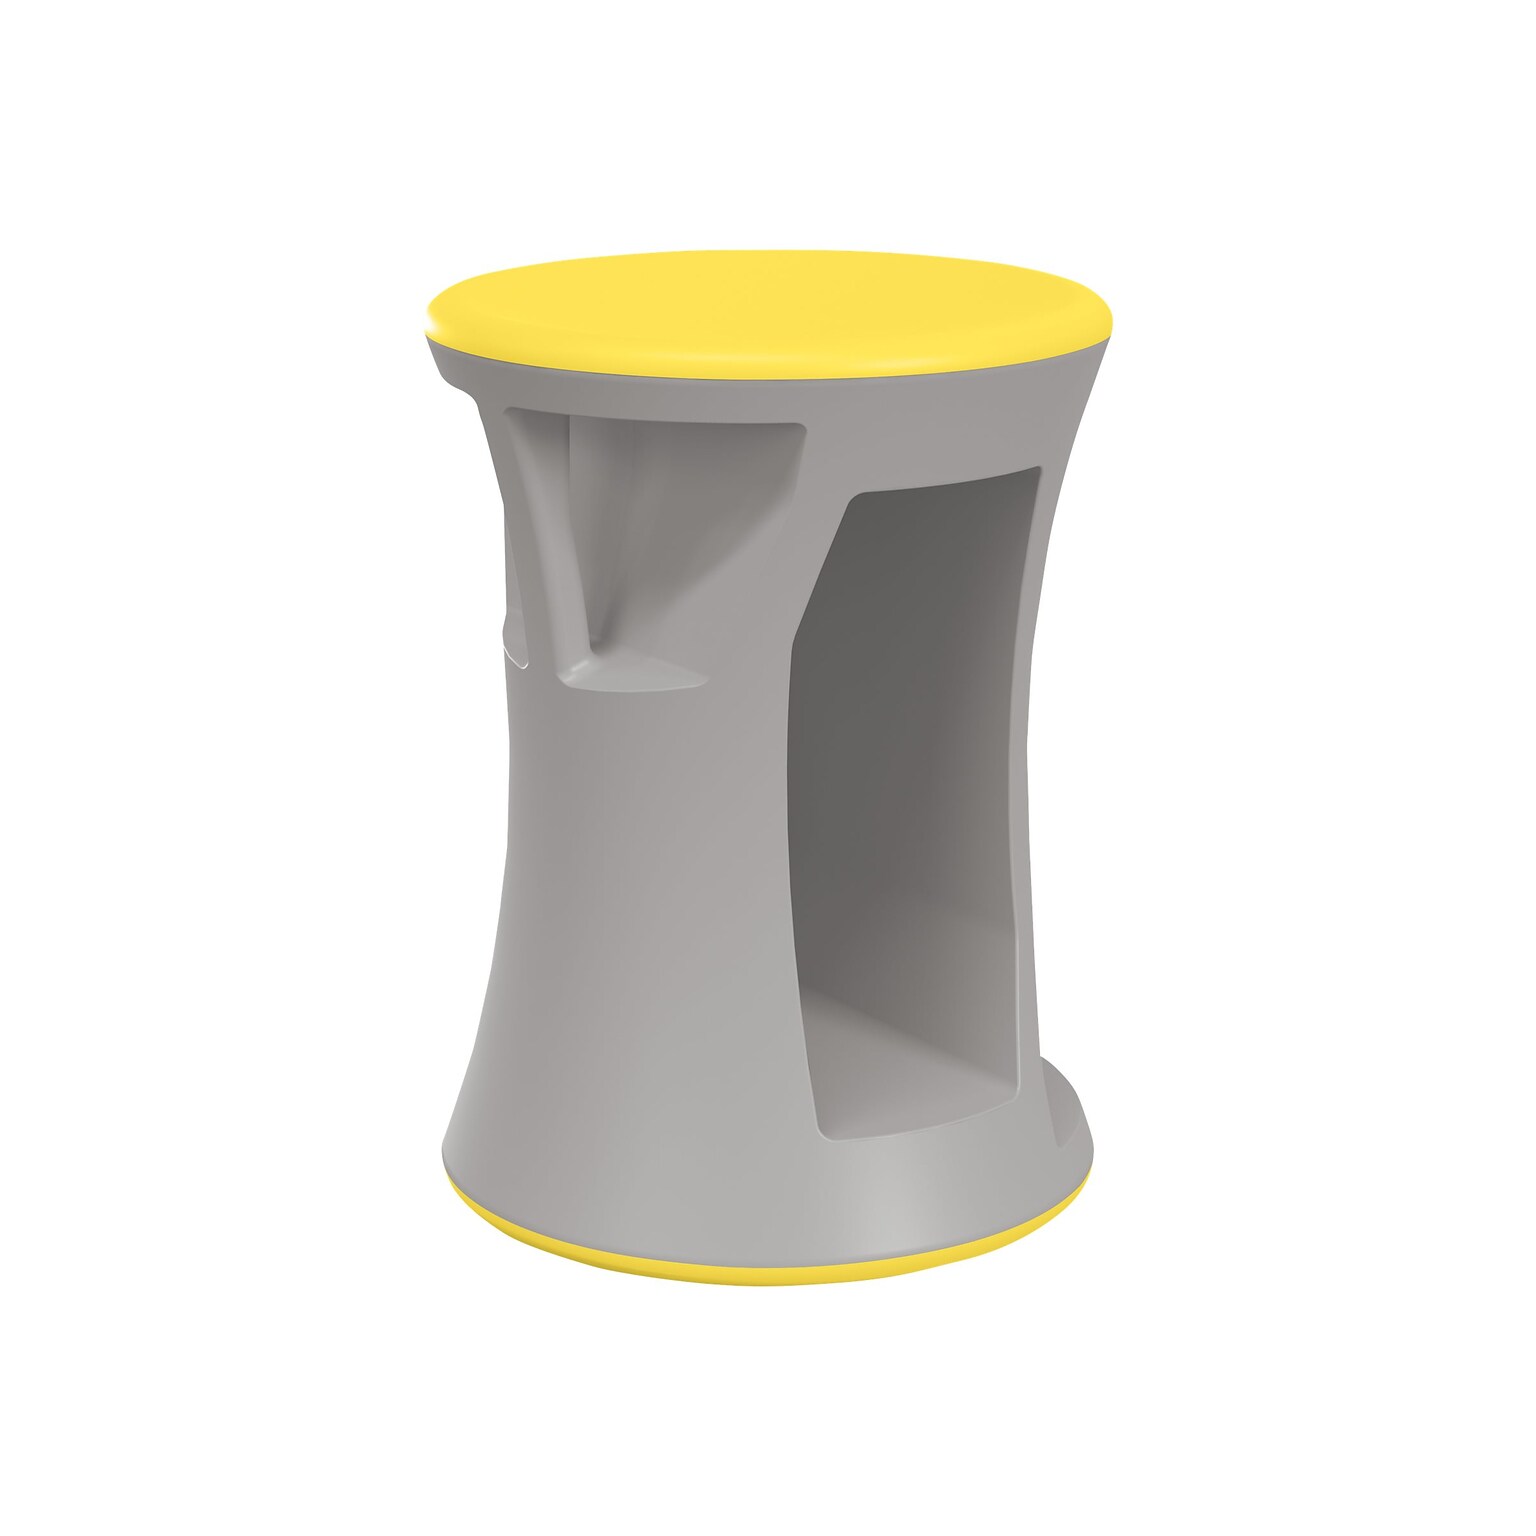 MooreCo Hierarchy Flipz Rubber School Chair, Yellow/Gray (83464-YELLOW)